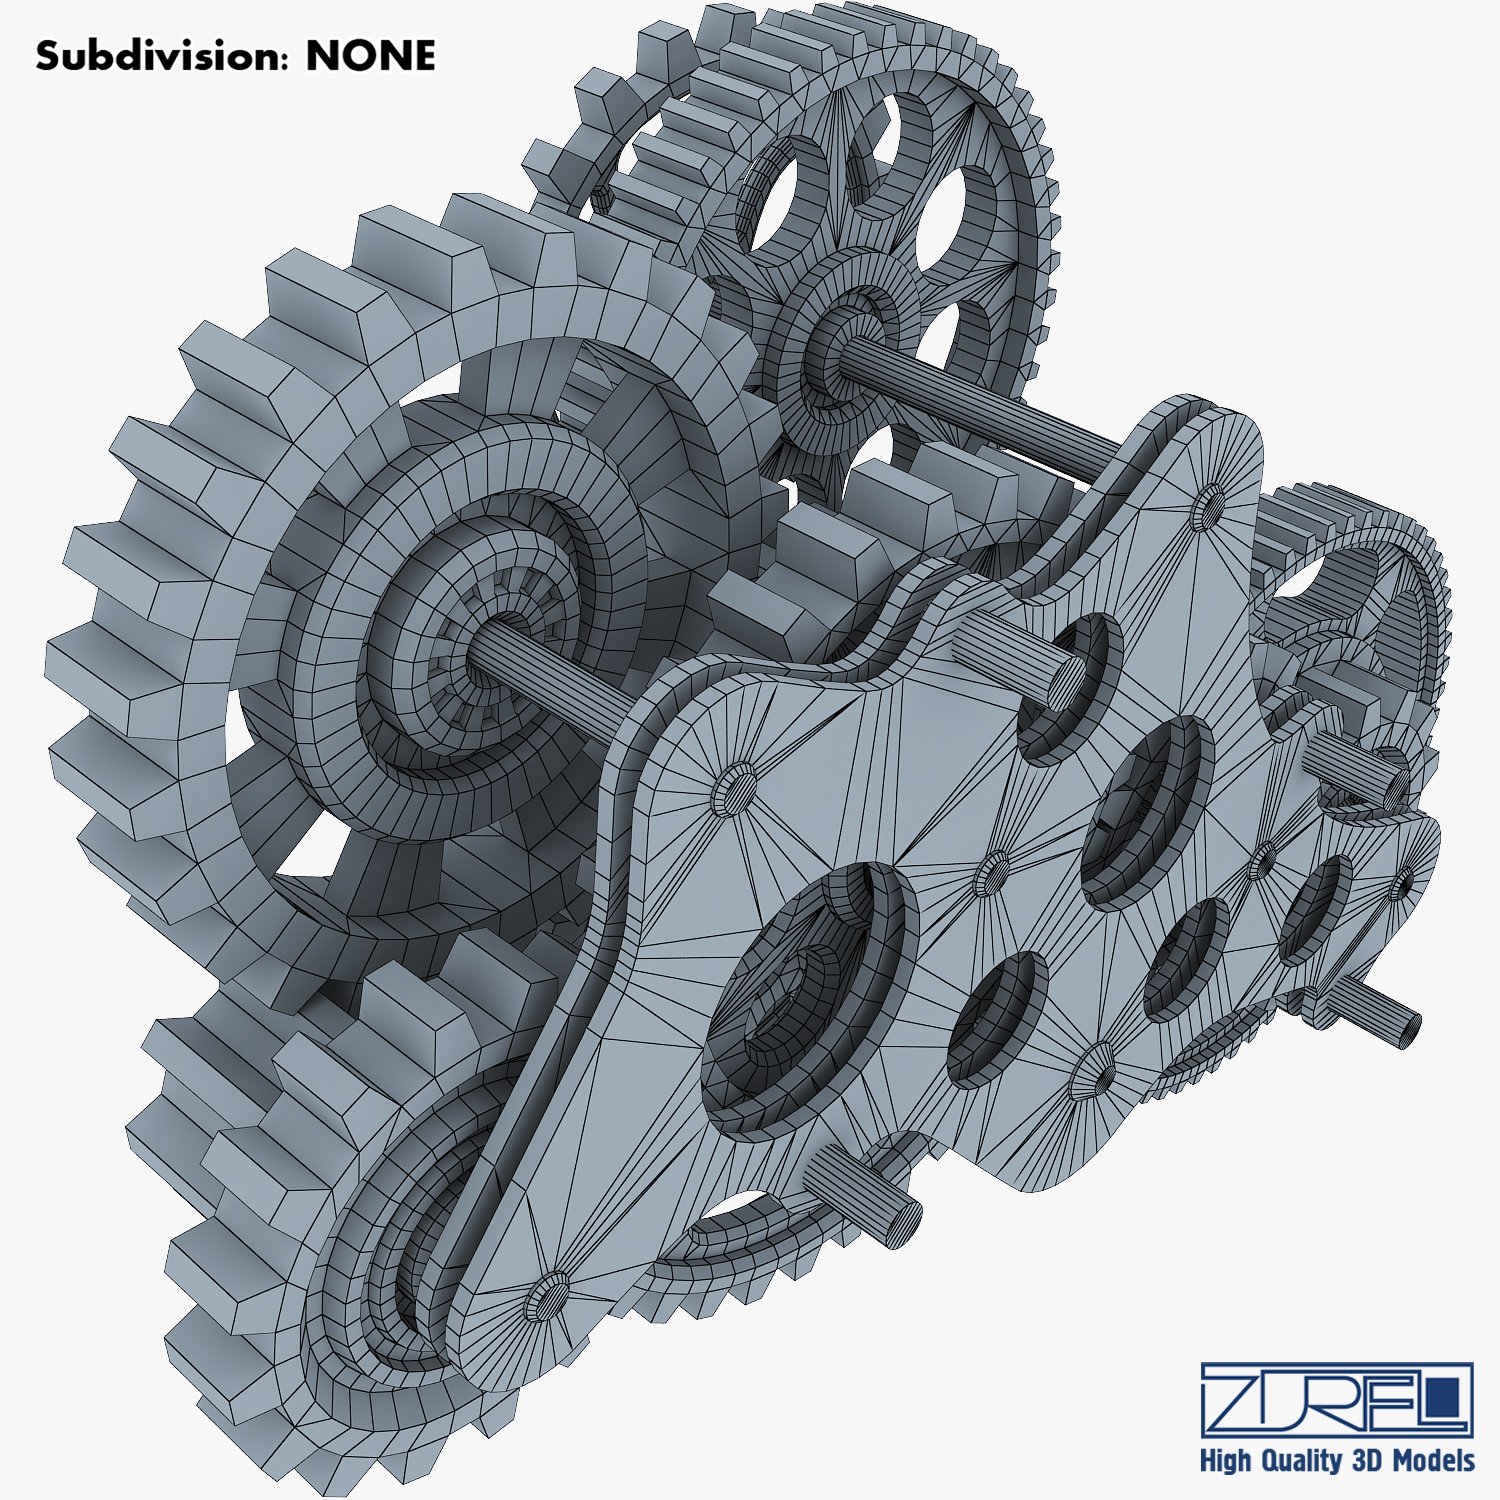 Gear Mechanism V 2 - 3D Model by Zurel